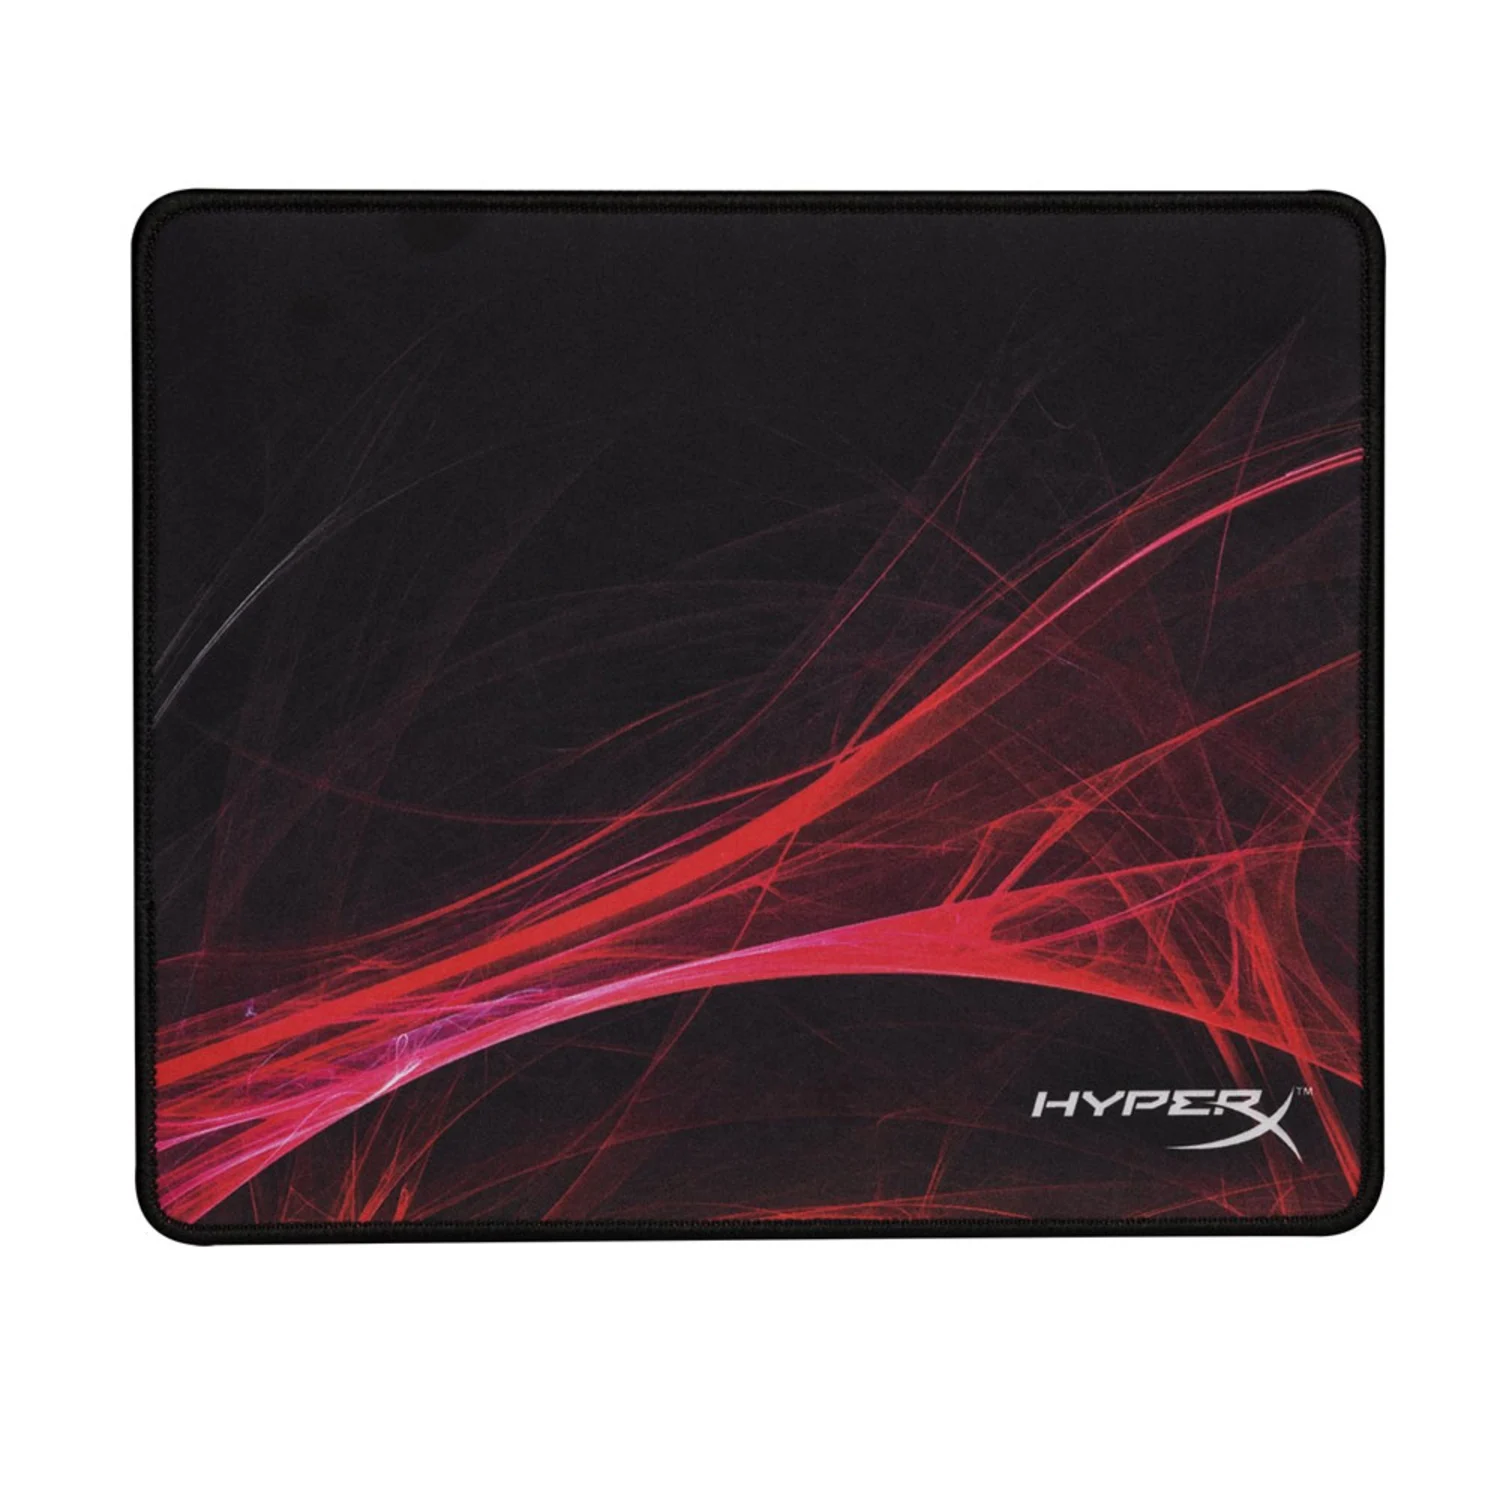 Mousepad Gamer Kingston HyperX Fury Pro Small Speed Edition - Preto (HX-MPFS-S-SM)